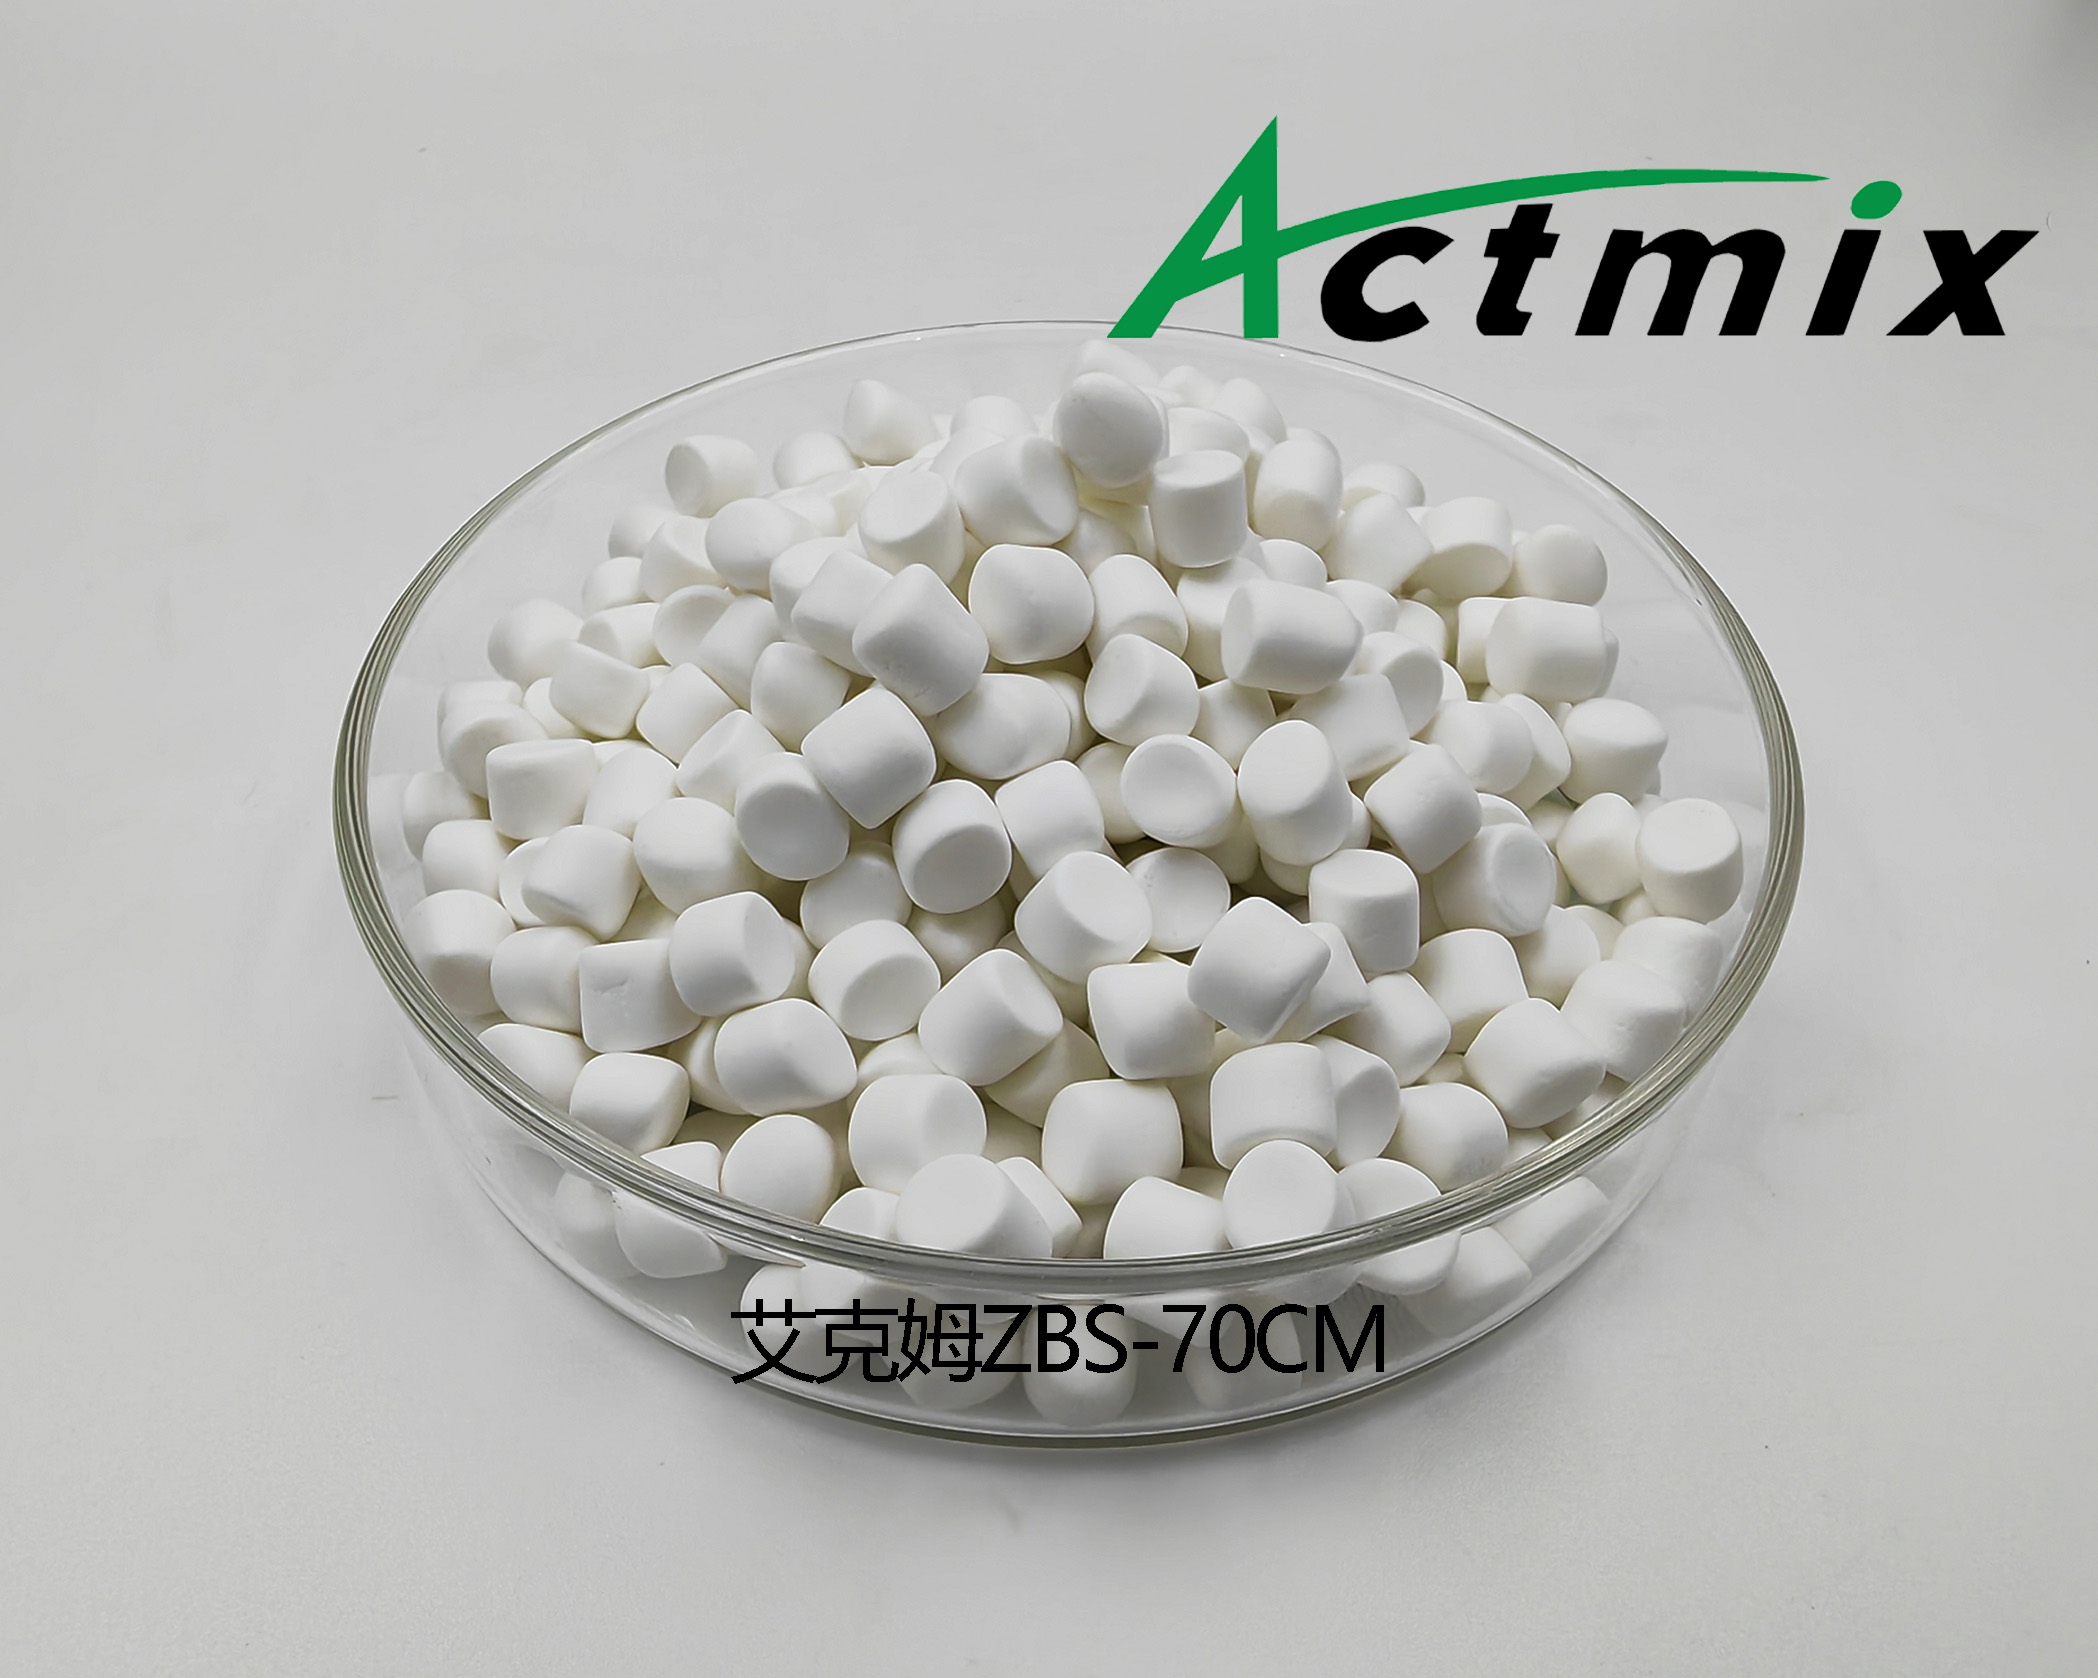 Actmix ZBS-70CM